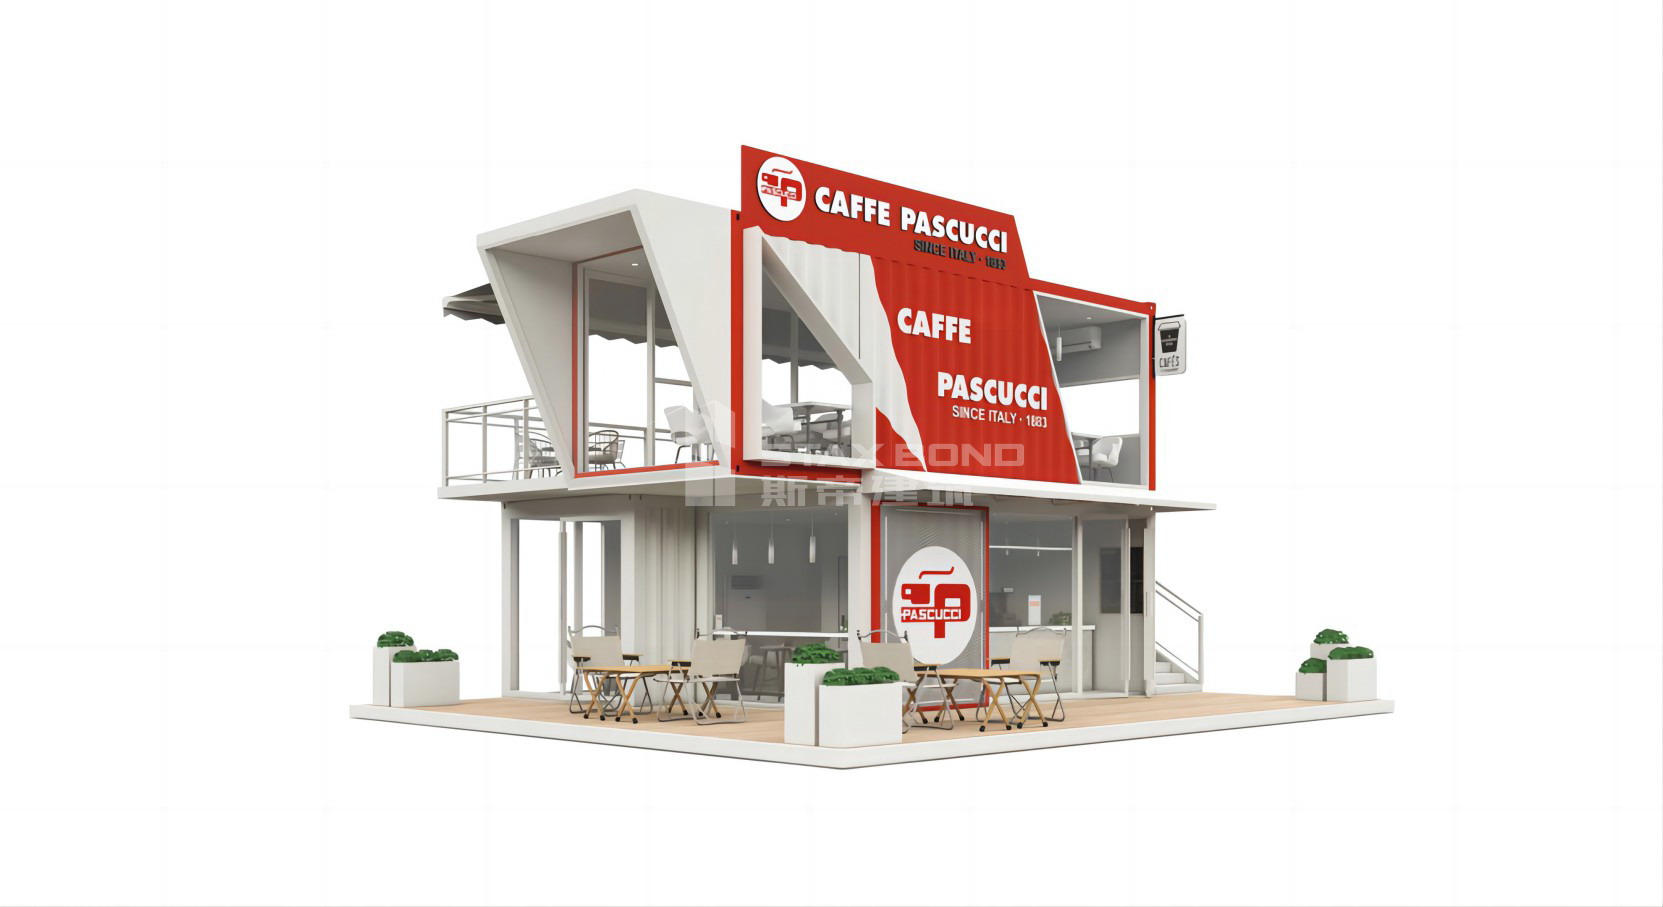 Modular Container Building, double-decker cafe